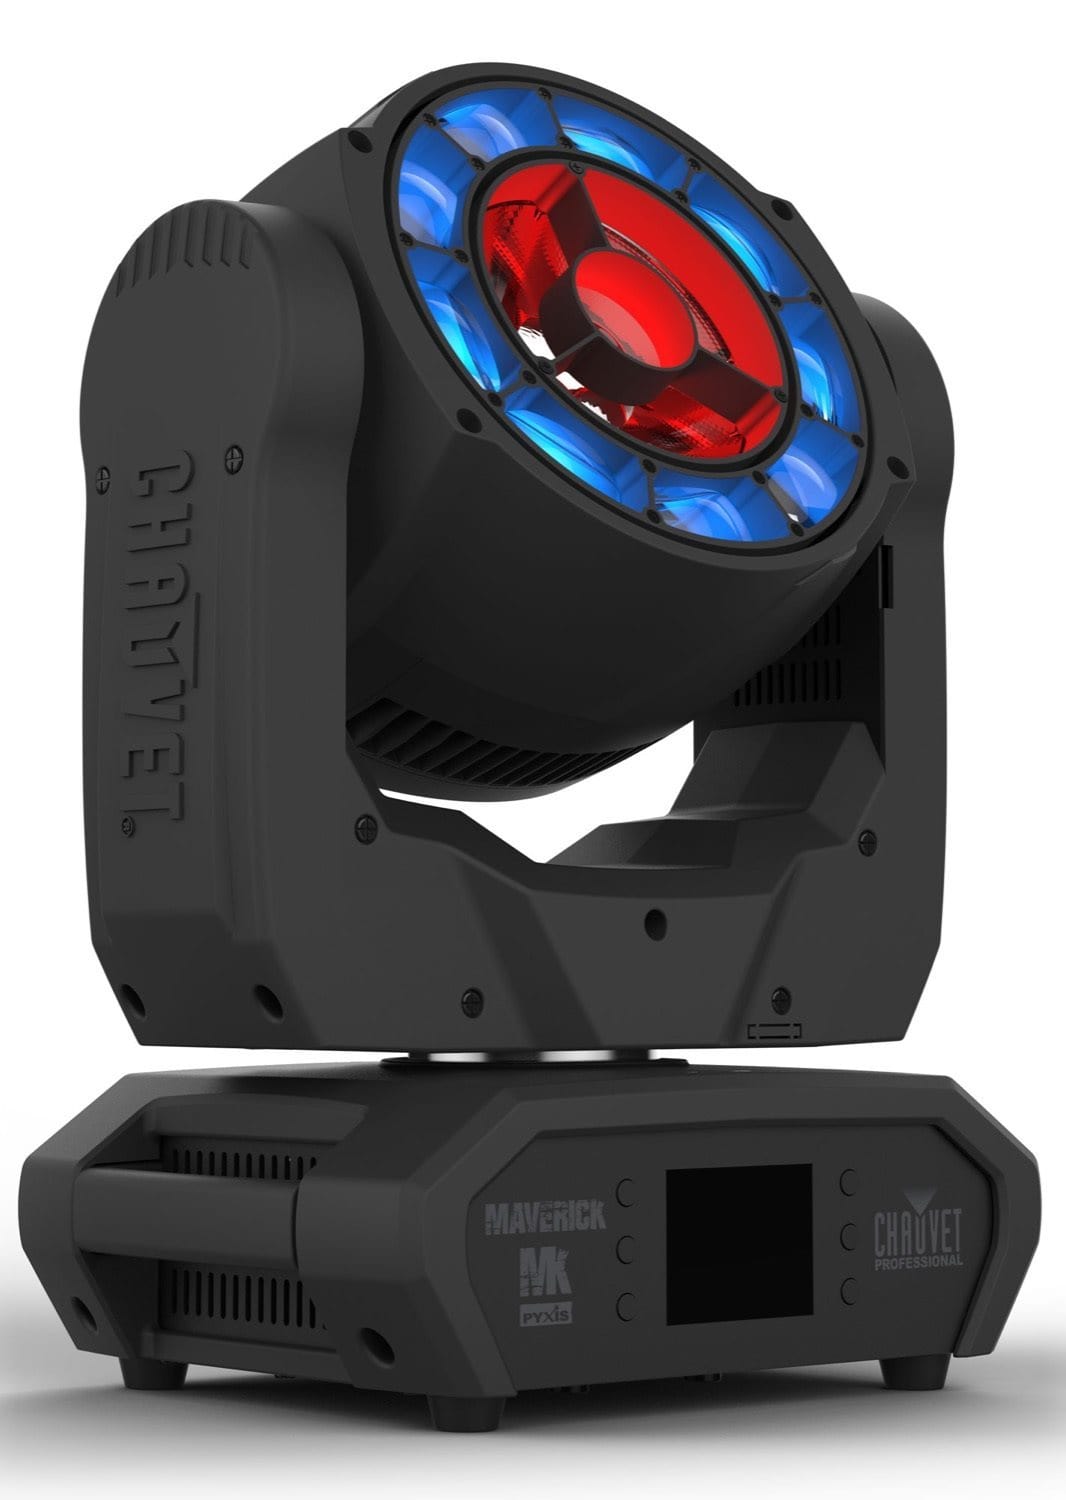 Chauvet Maverick MK Pyxis LED Moving Head Light - PSSL ProSound and Stage Lighting